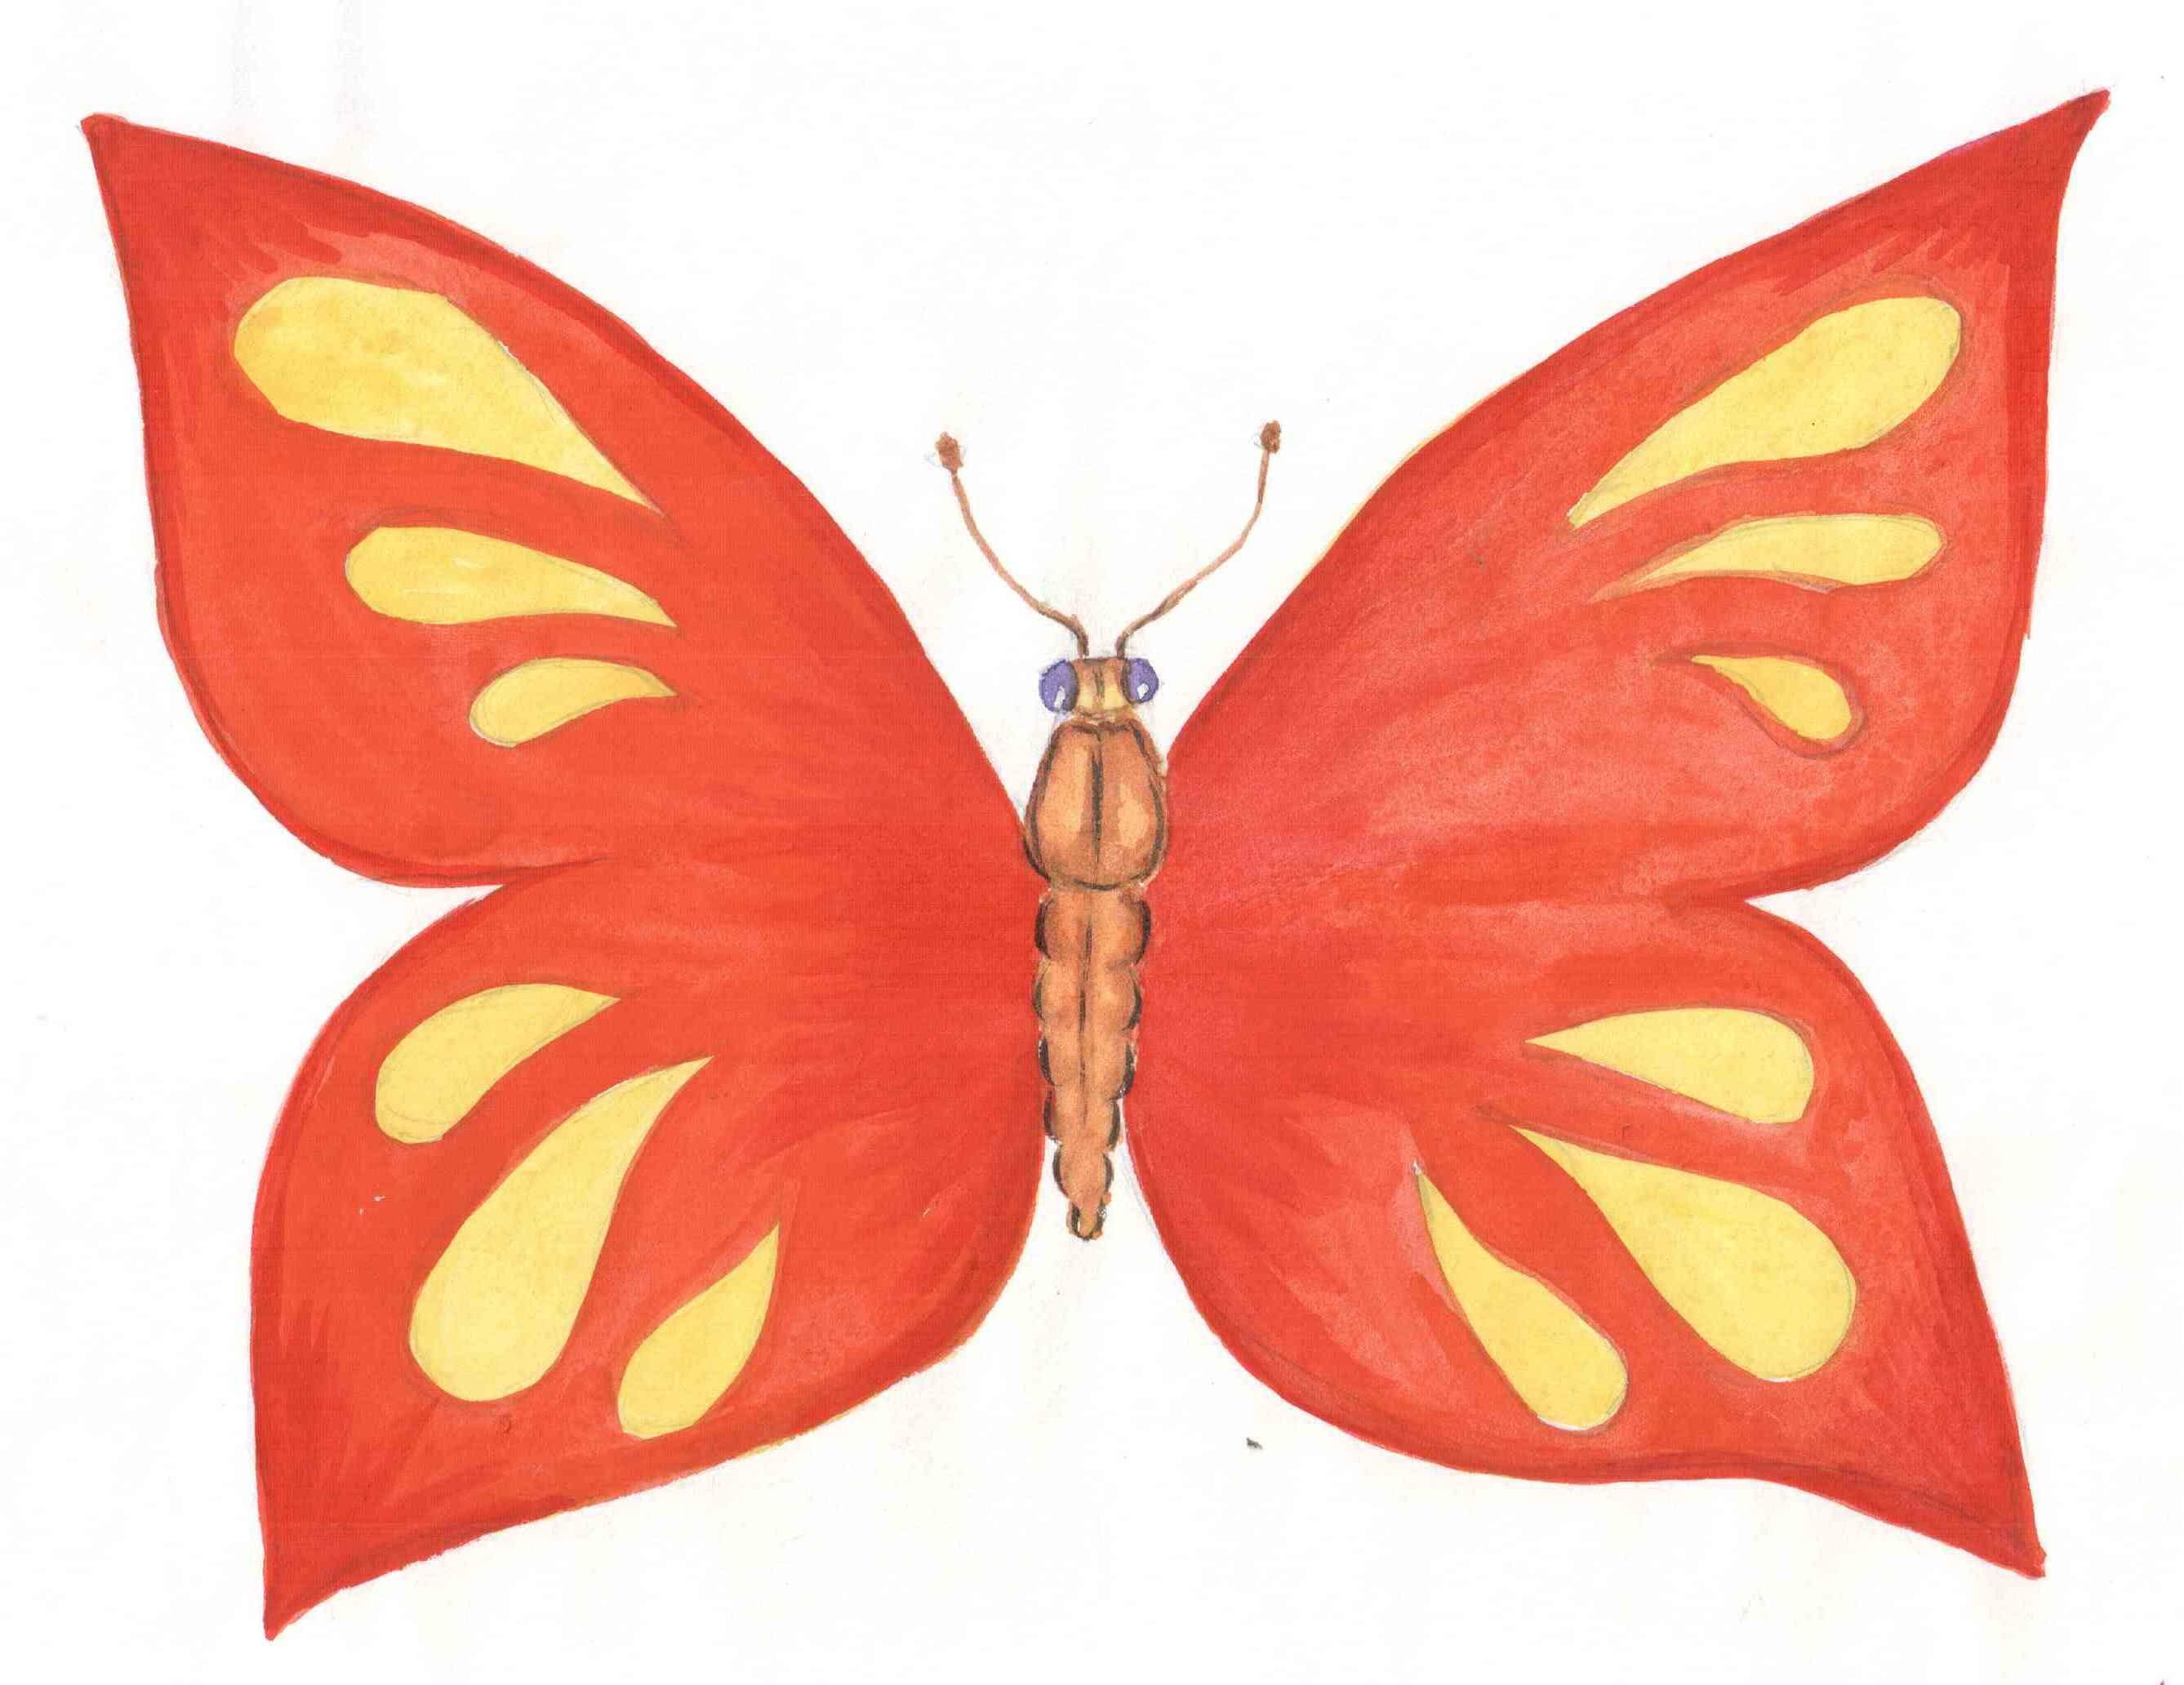 Симметричная бабочка рисунок